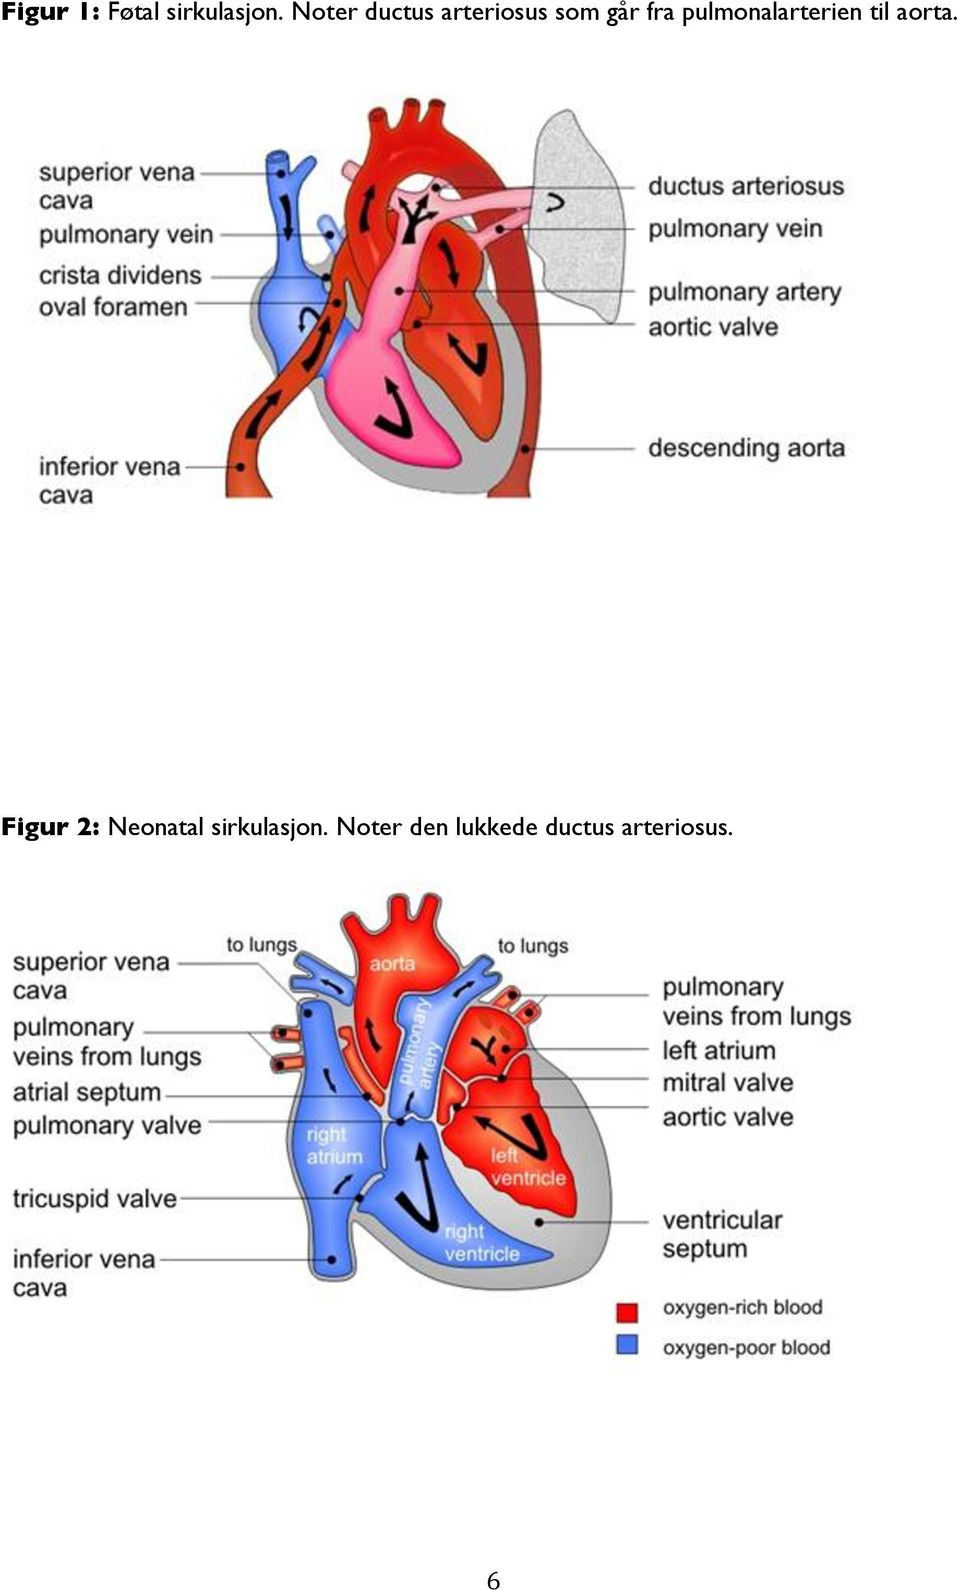 pulmonalarterien til aorta.